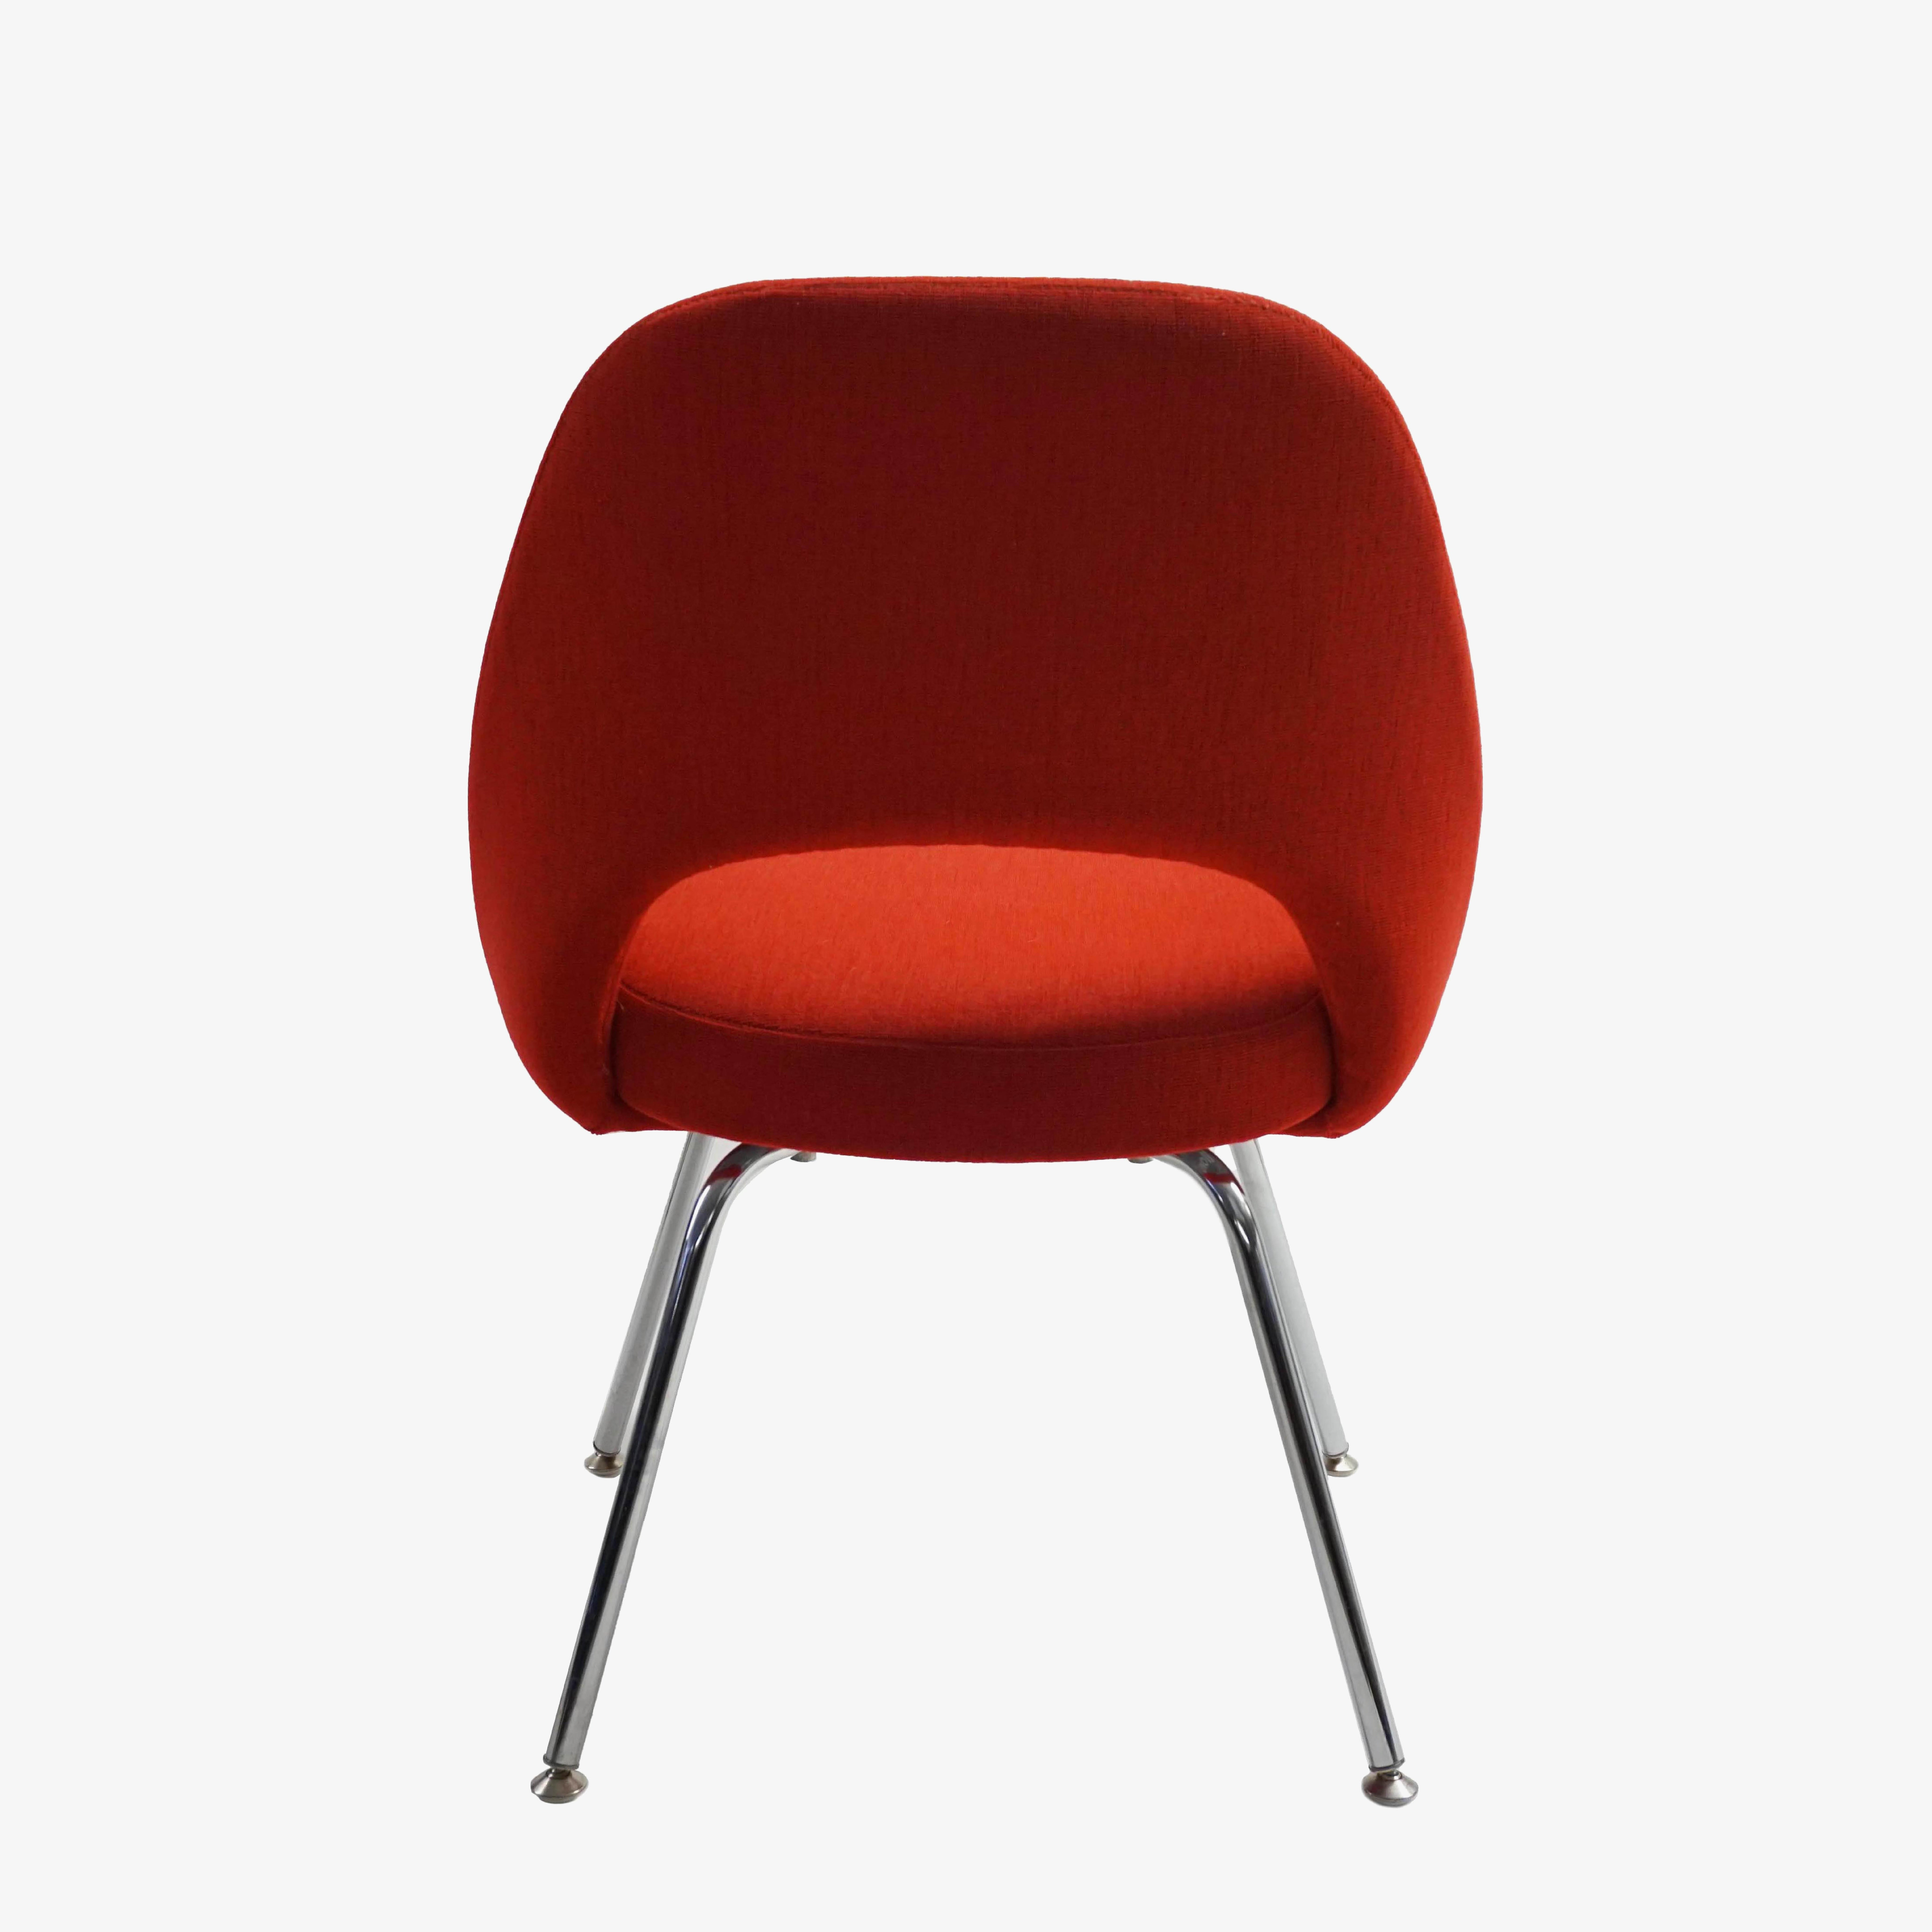 North American Saarinen Executive Armless Chair in Fire Red Fabric, Chrome Tubular Legs